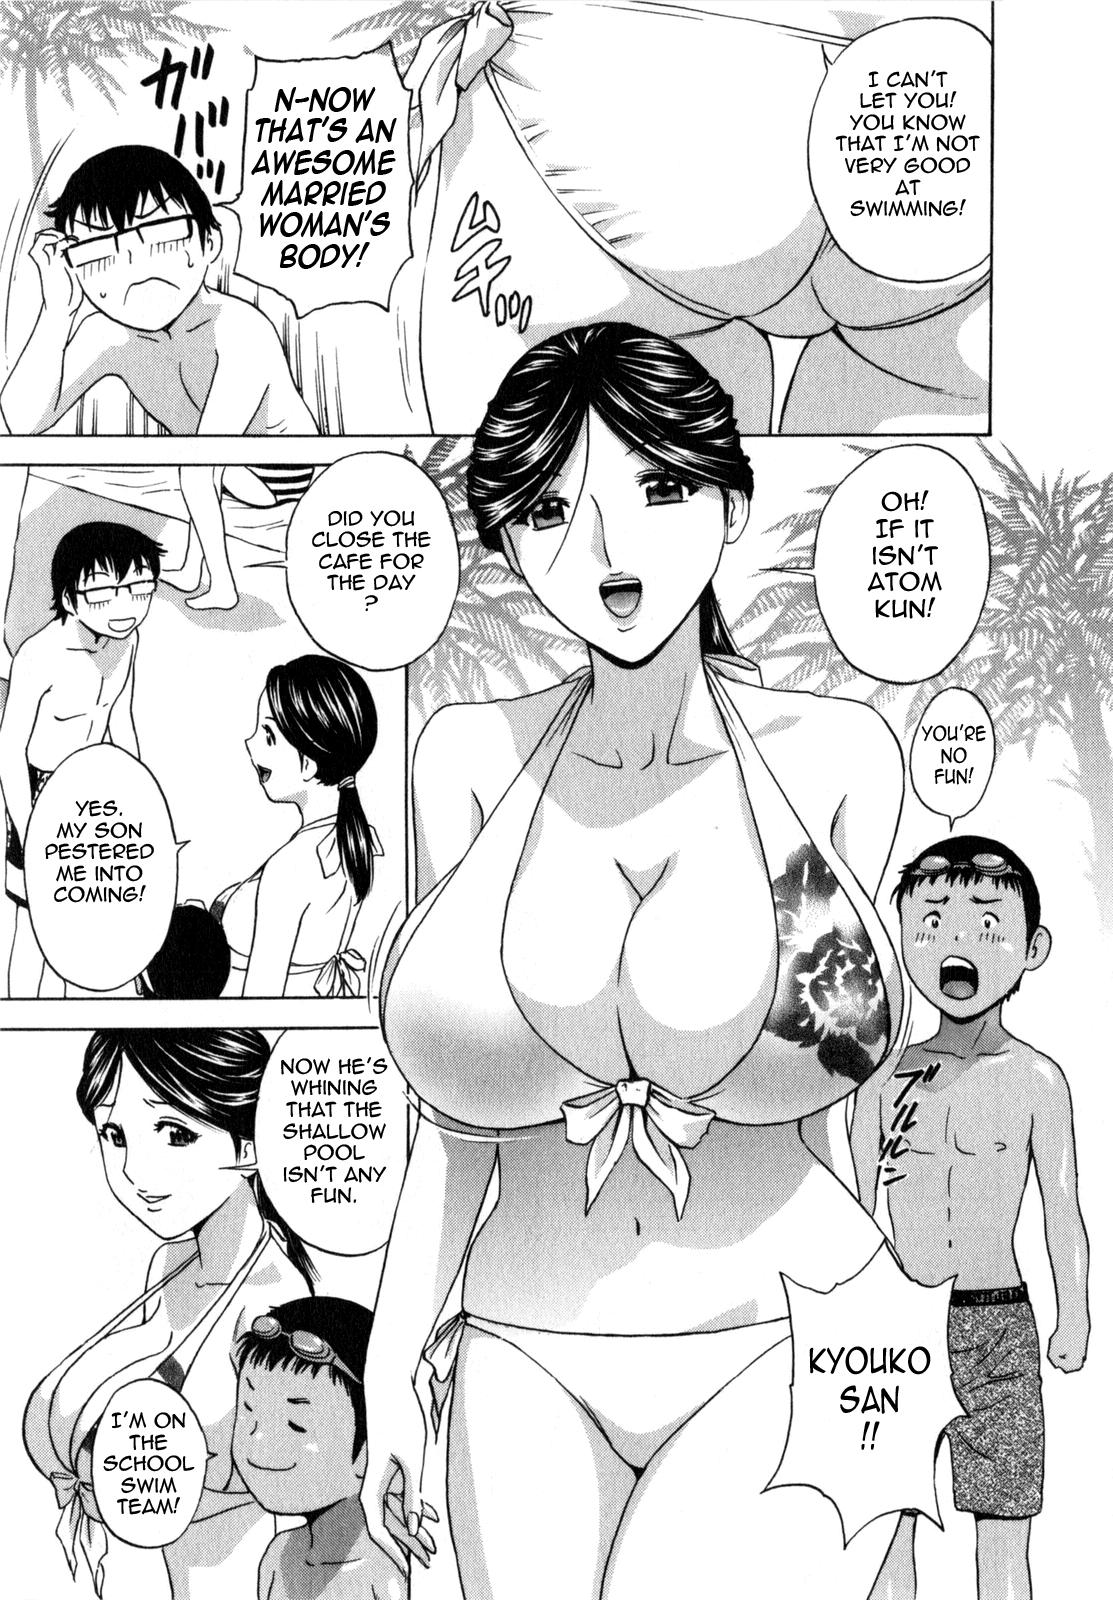 [Hidemaru] Life with Married Women Just Like a Manga 1 - Ch. 1-7 [English] {Tadanohito} 127